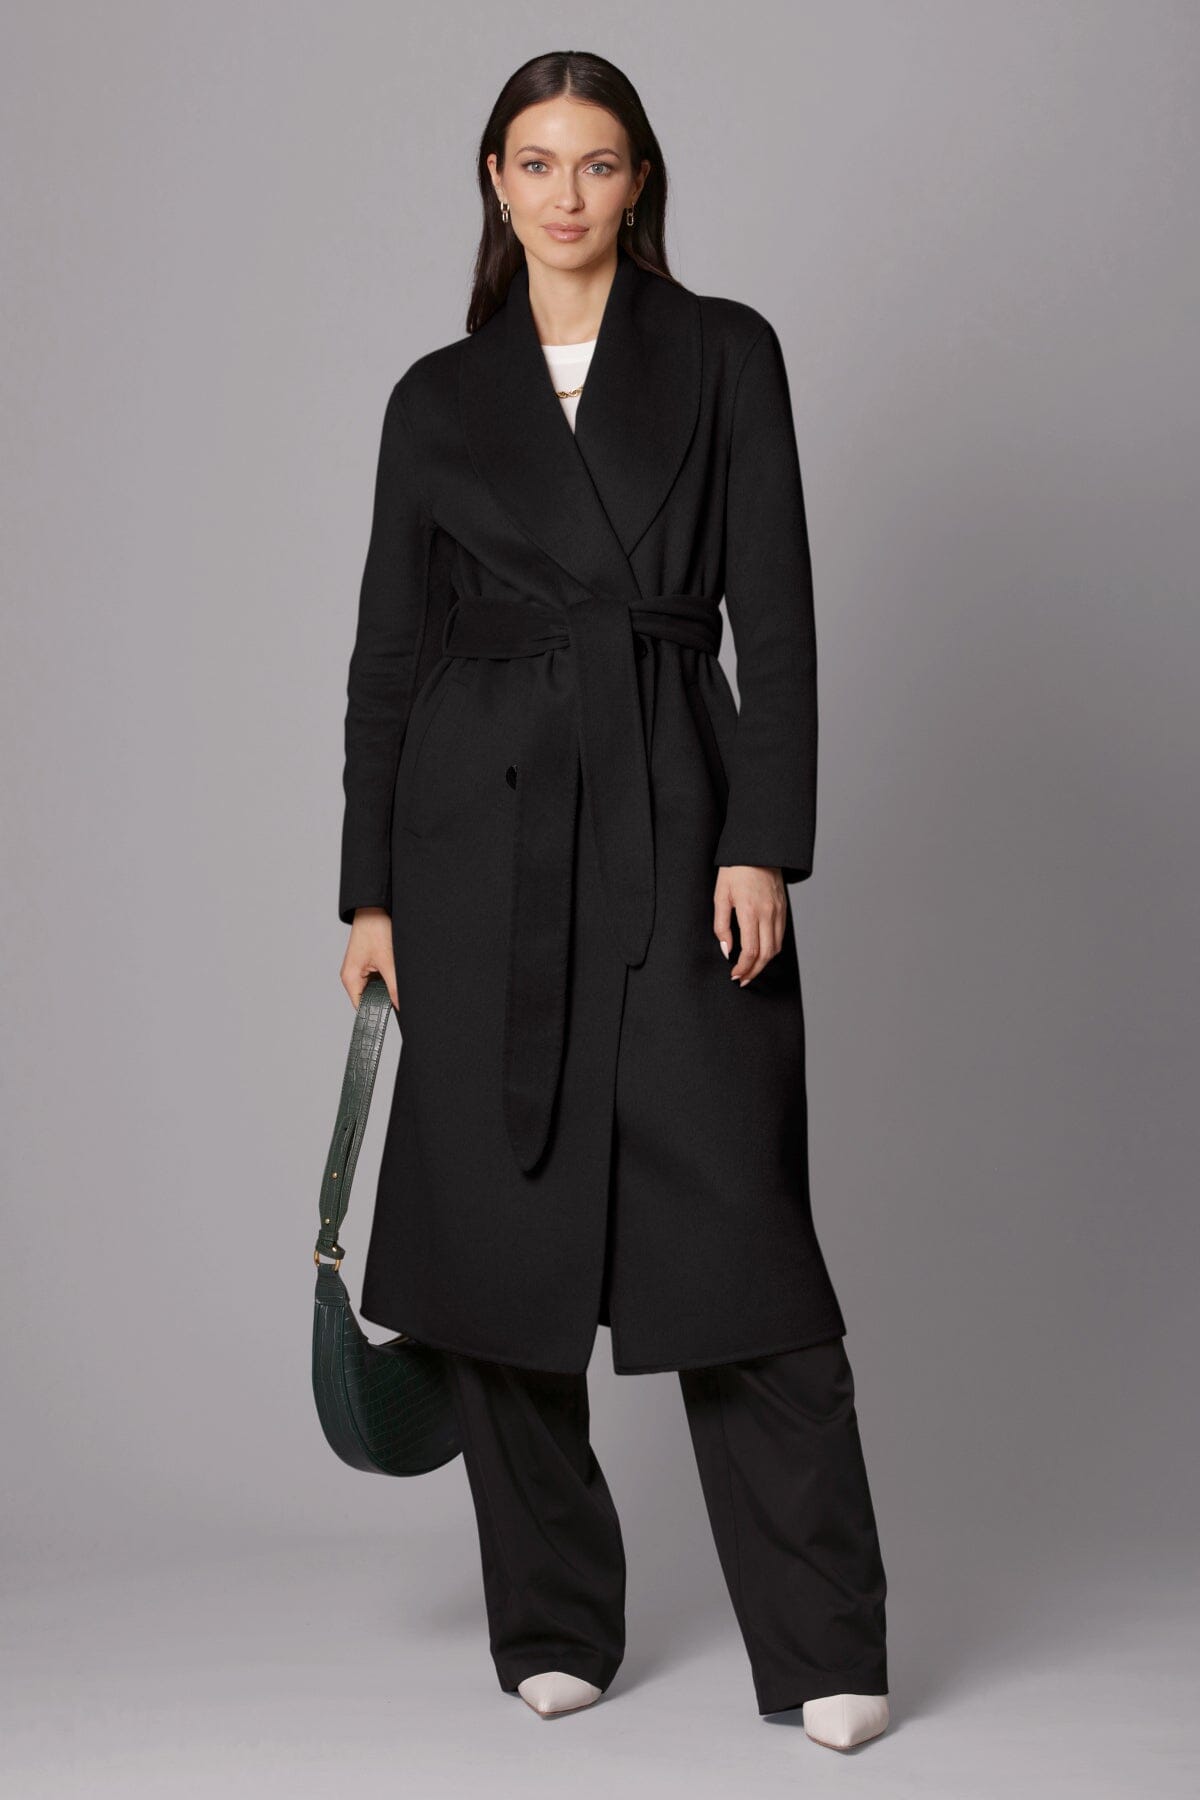 black double face wrap mid length coat - women's figure flattering luxury coats outerwear